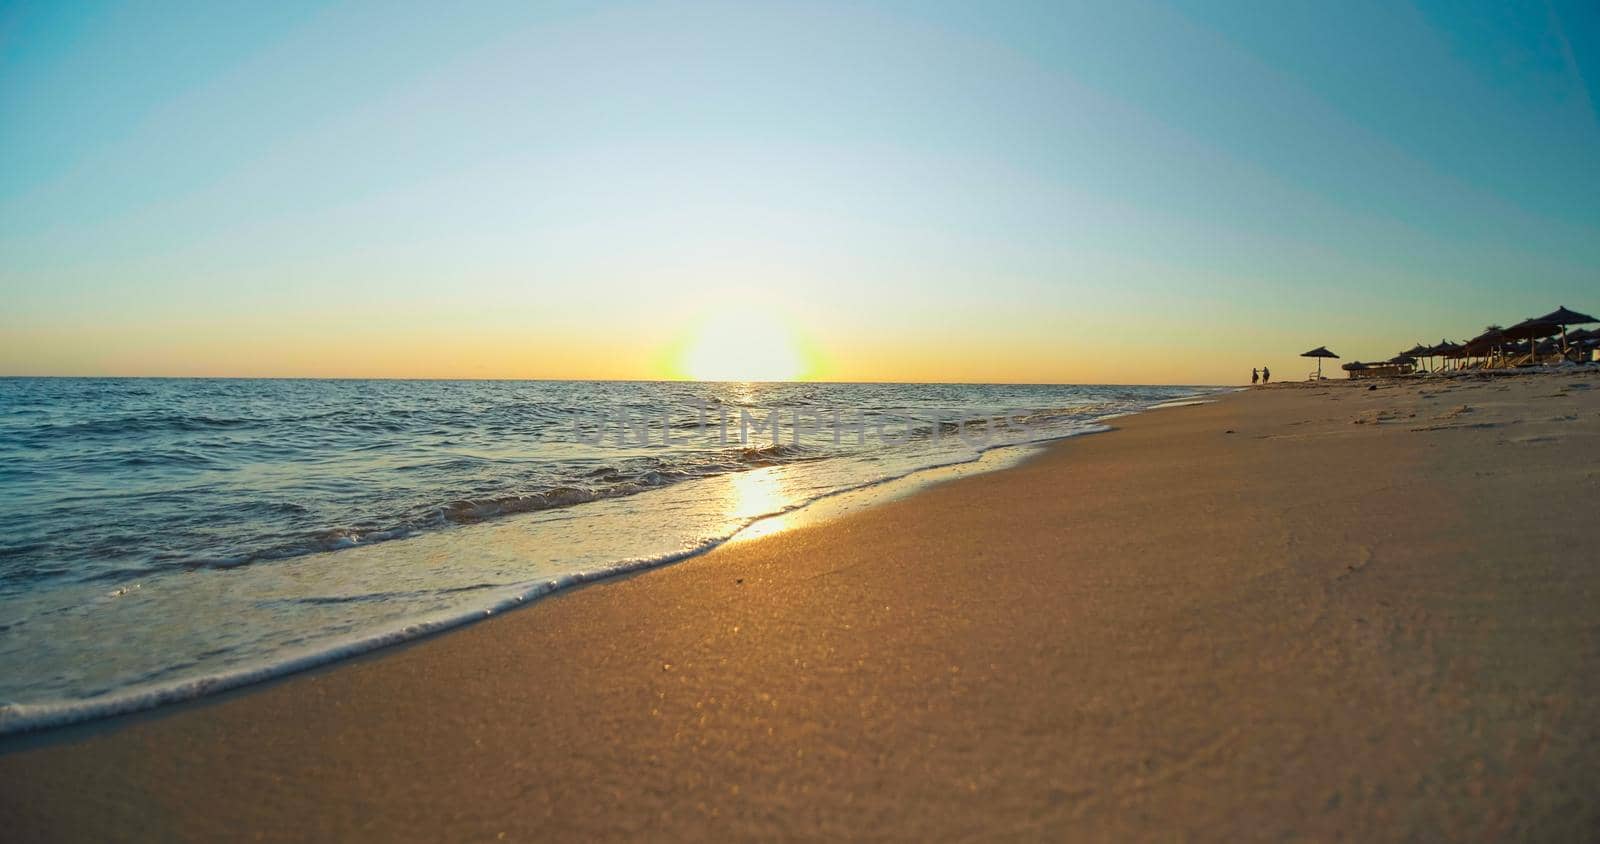 Sunset on the beach, shining golden waves in Tunisia, Africa. Beautiful landscape, travel destinations, enjoying holiday, Mediterranean Sea, vacation seaside.